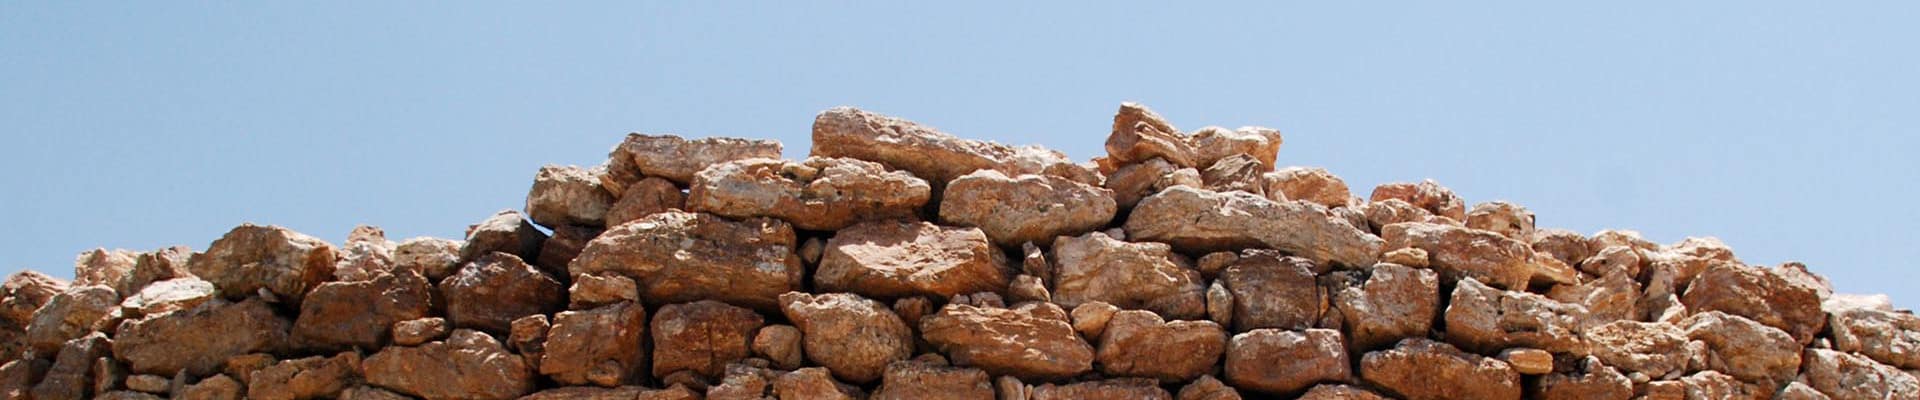 Ammonite Iron Age Tower in Jordan